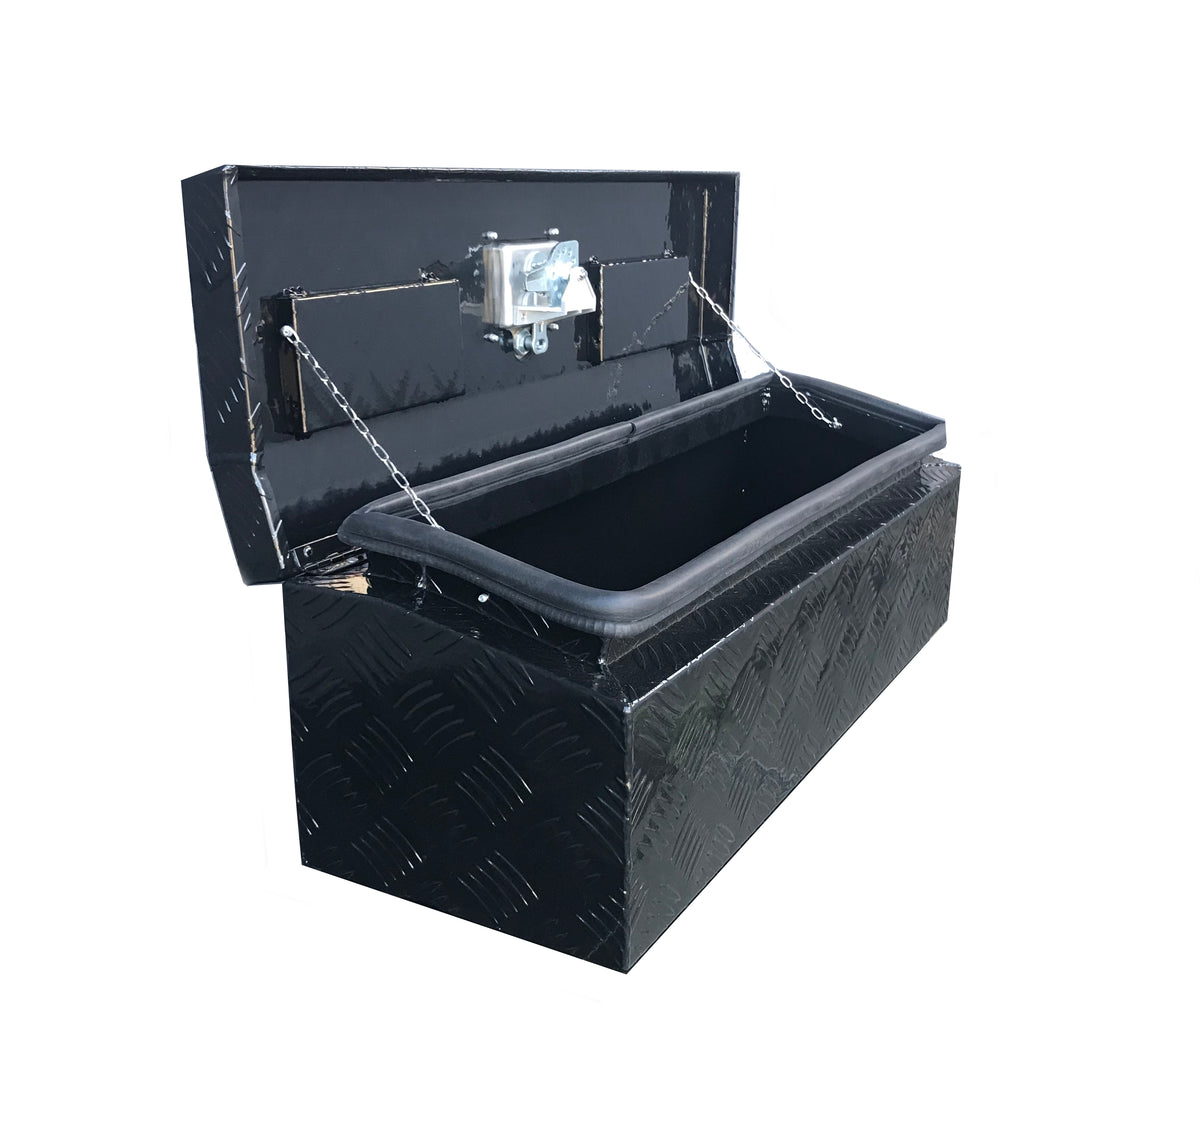 Brait 30x10x10 Aluminum Tool Box Storage for Truck ATV RV Boat Motorcycle Silver 